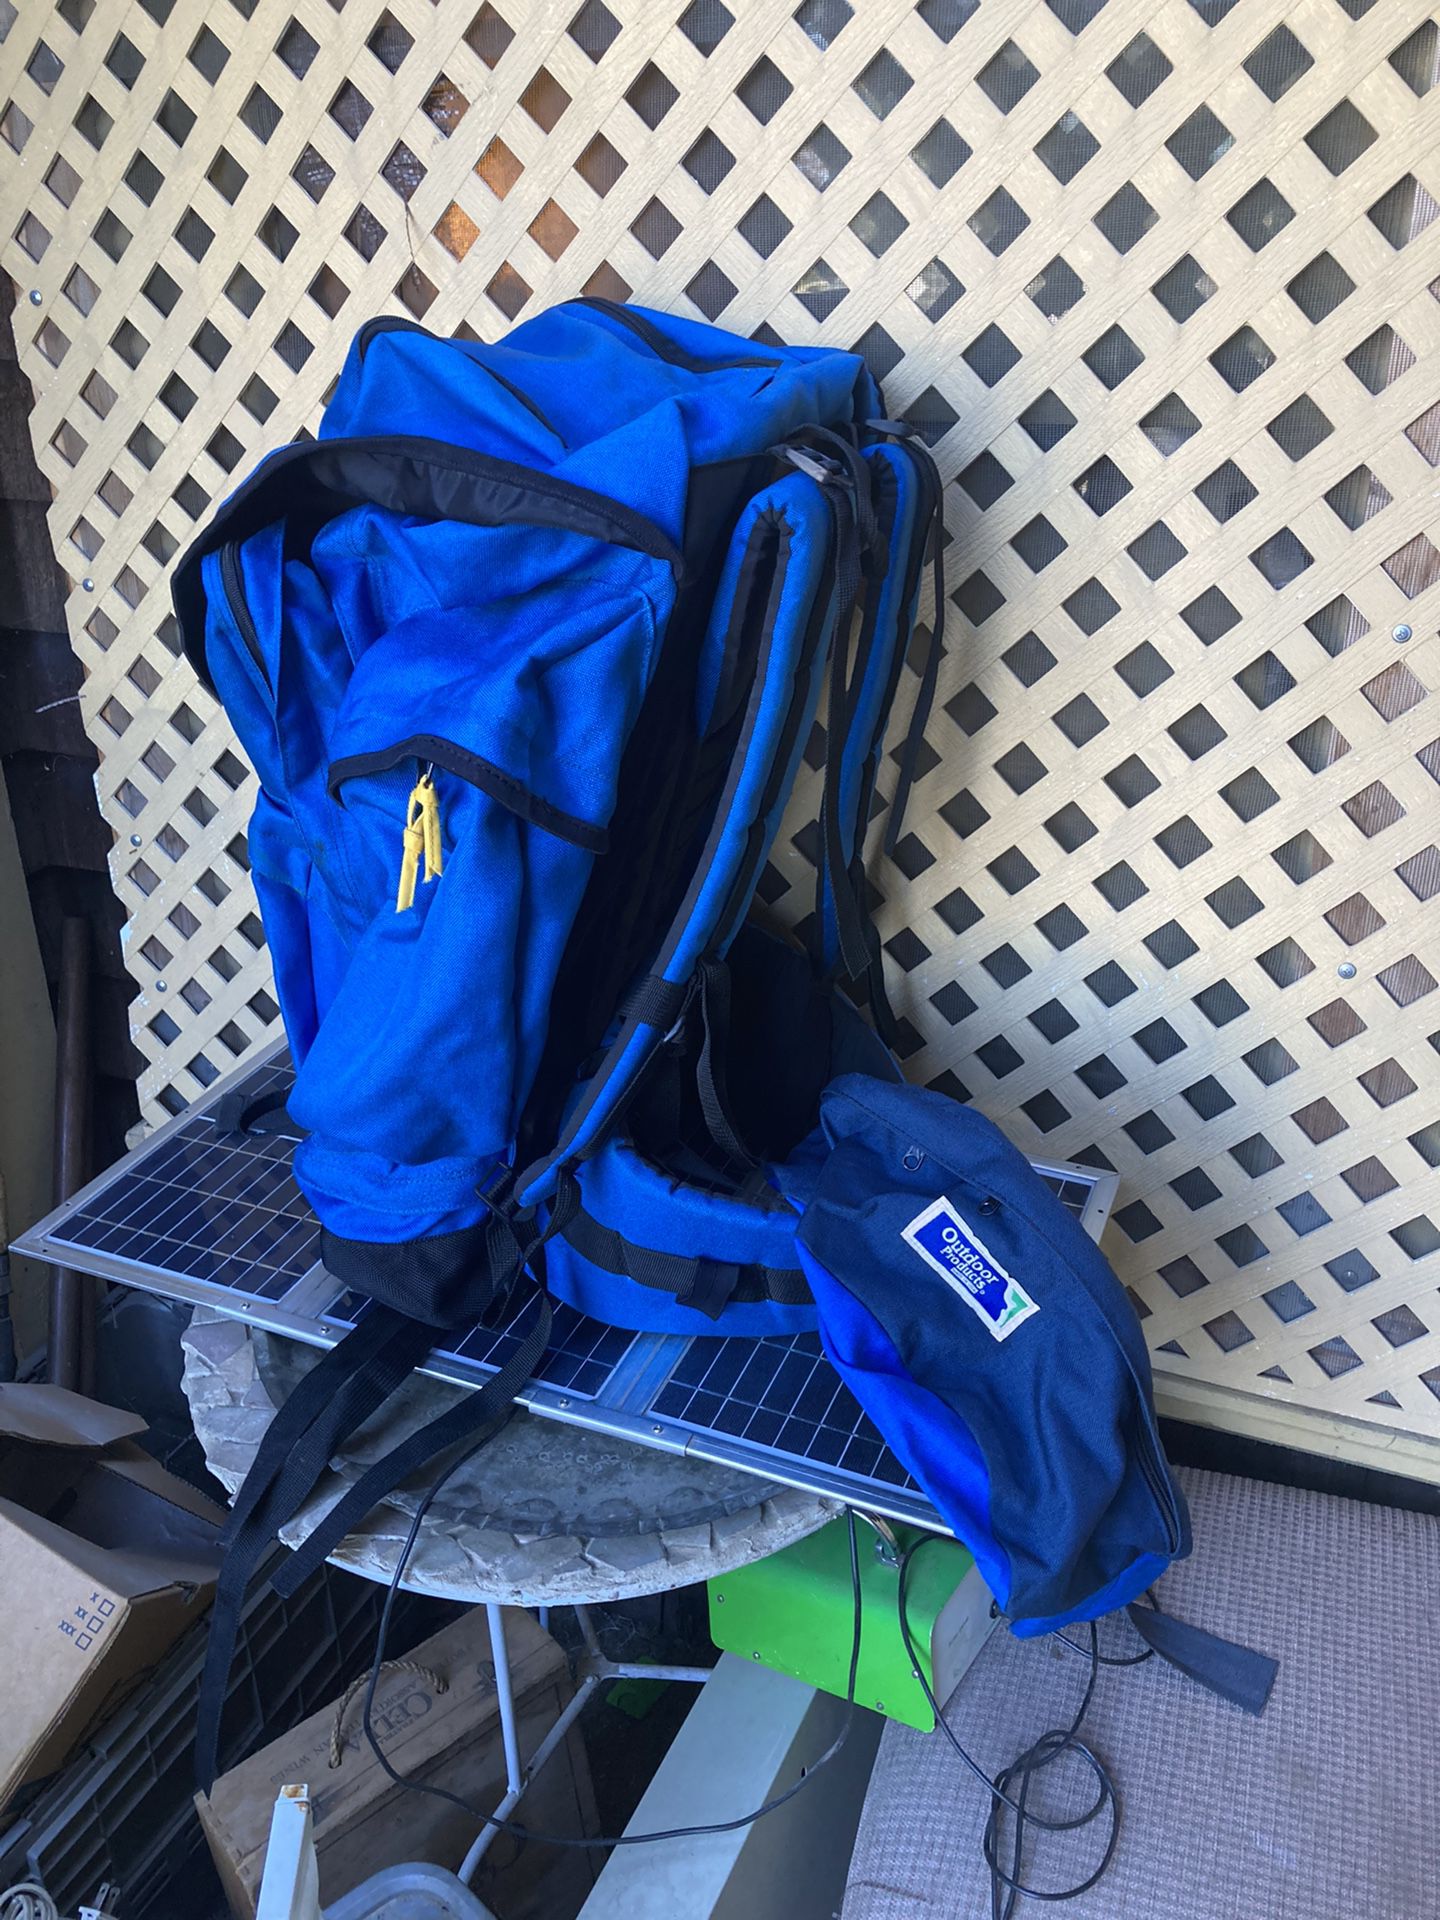 Hikers dream backpack